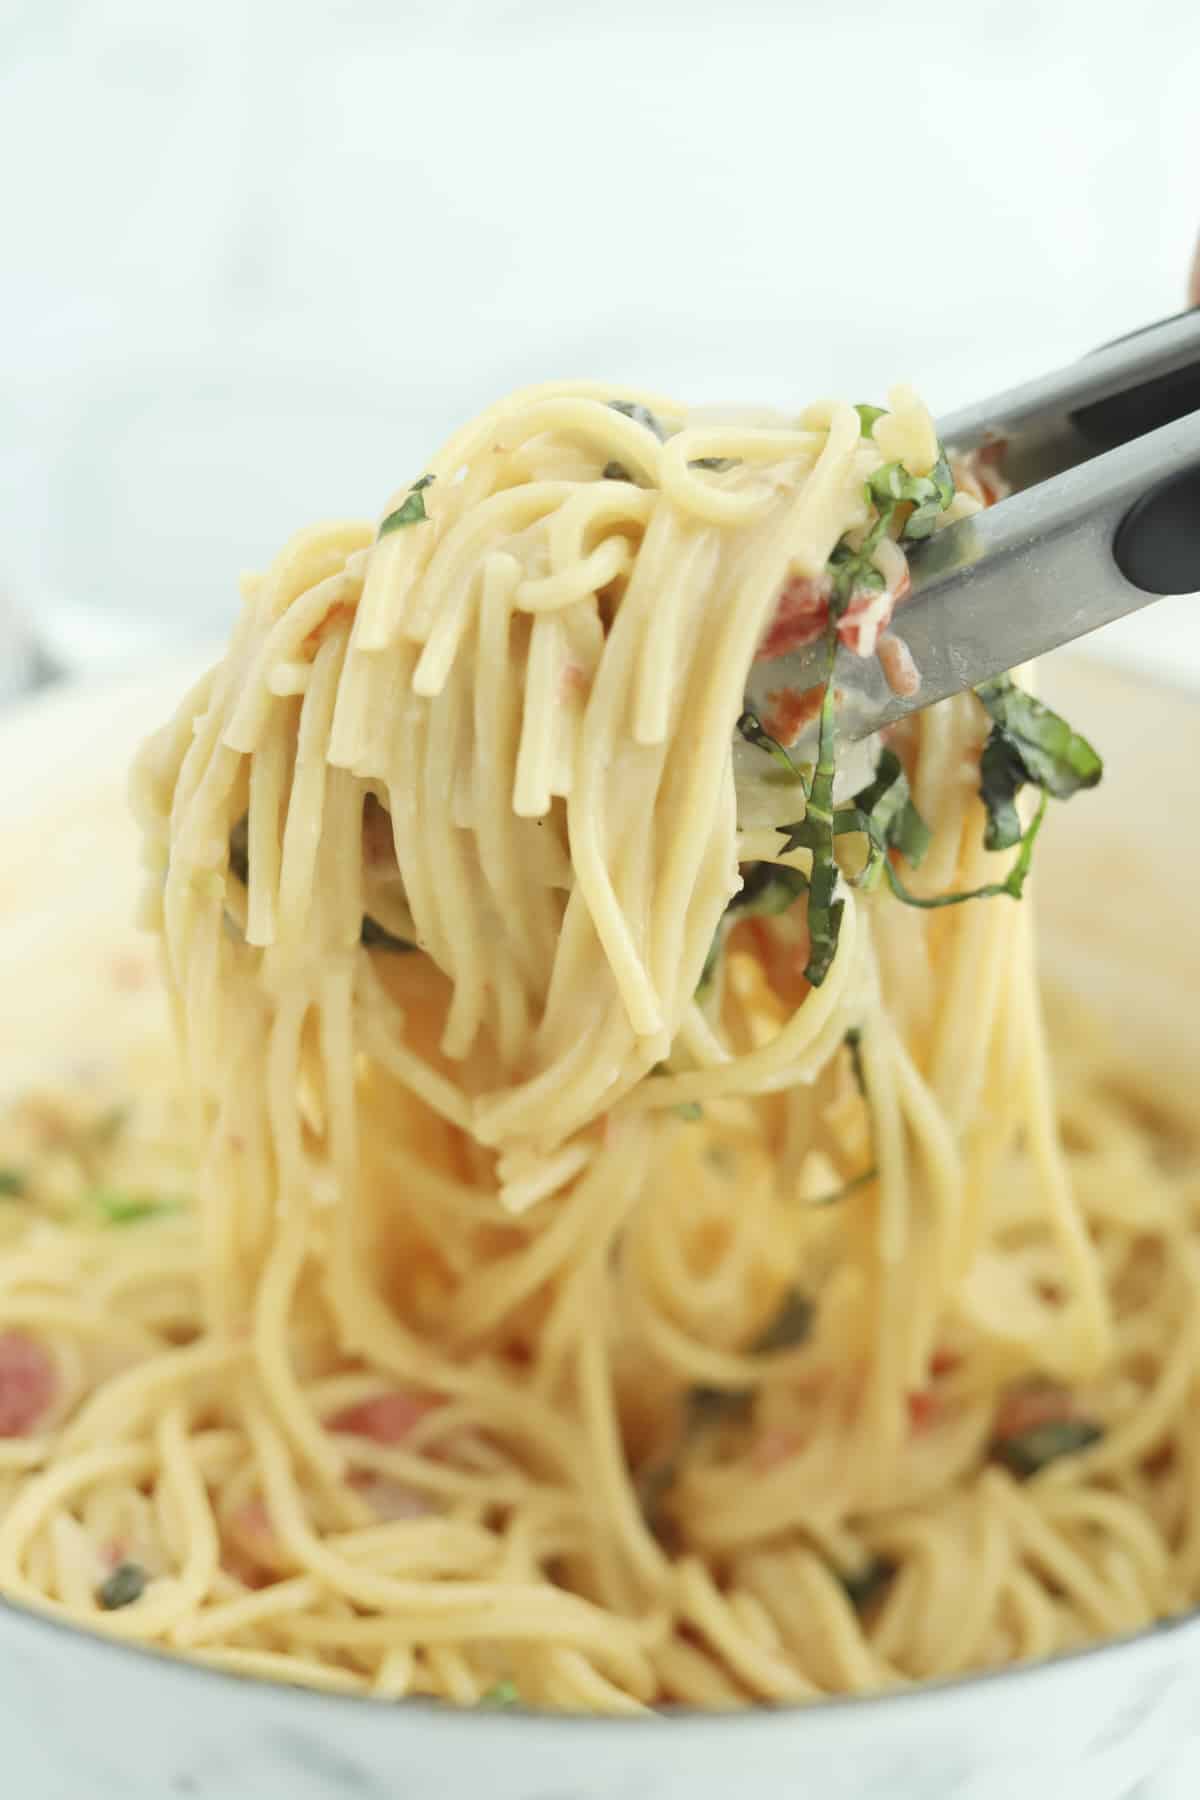 large scoop of parmesan pasta